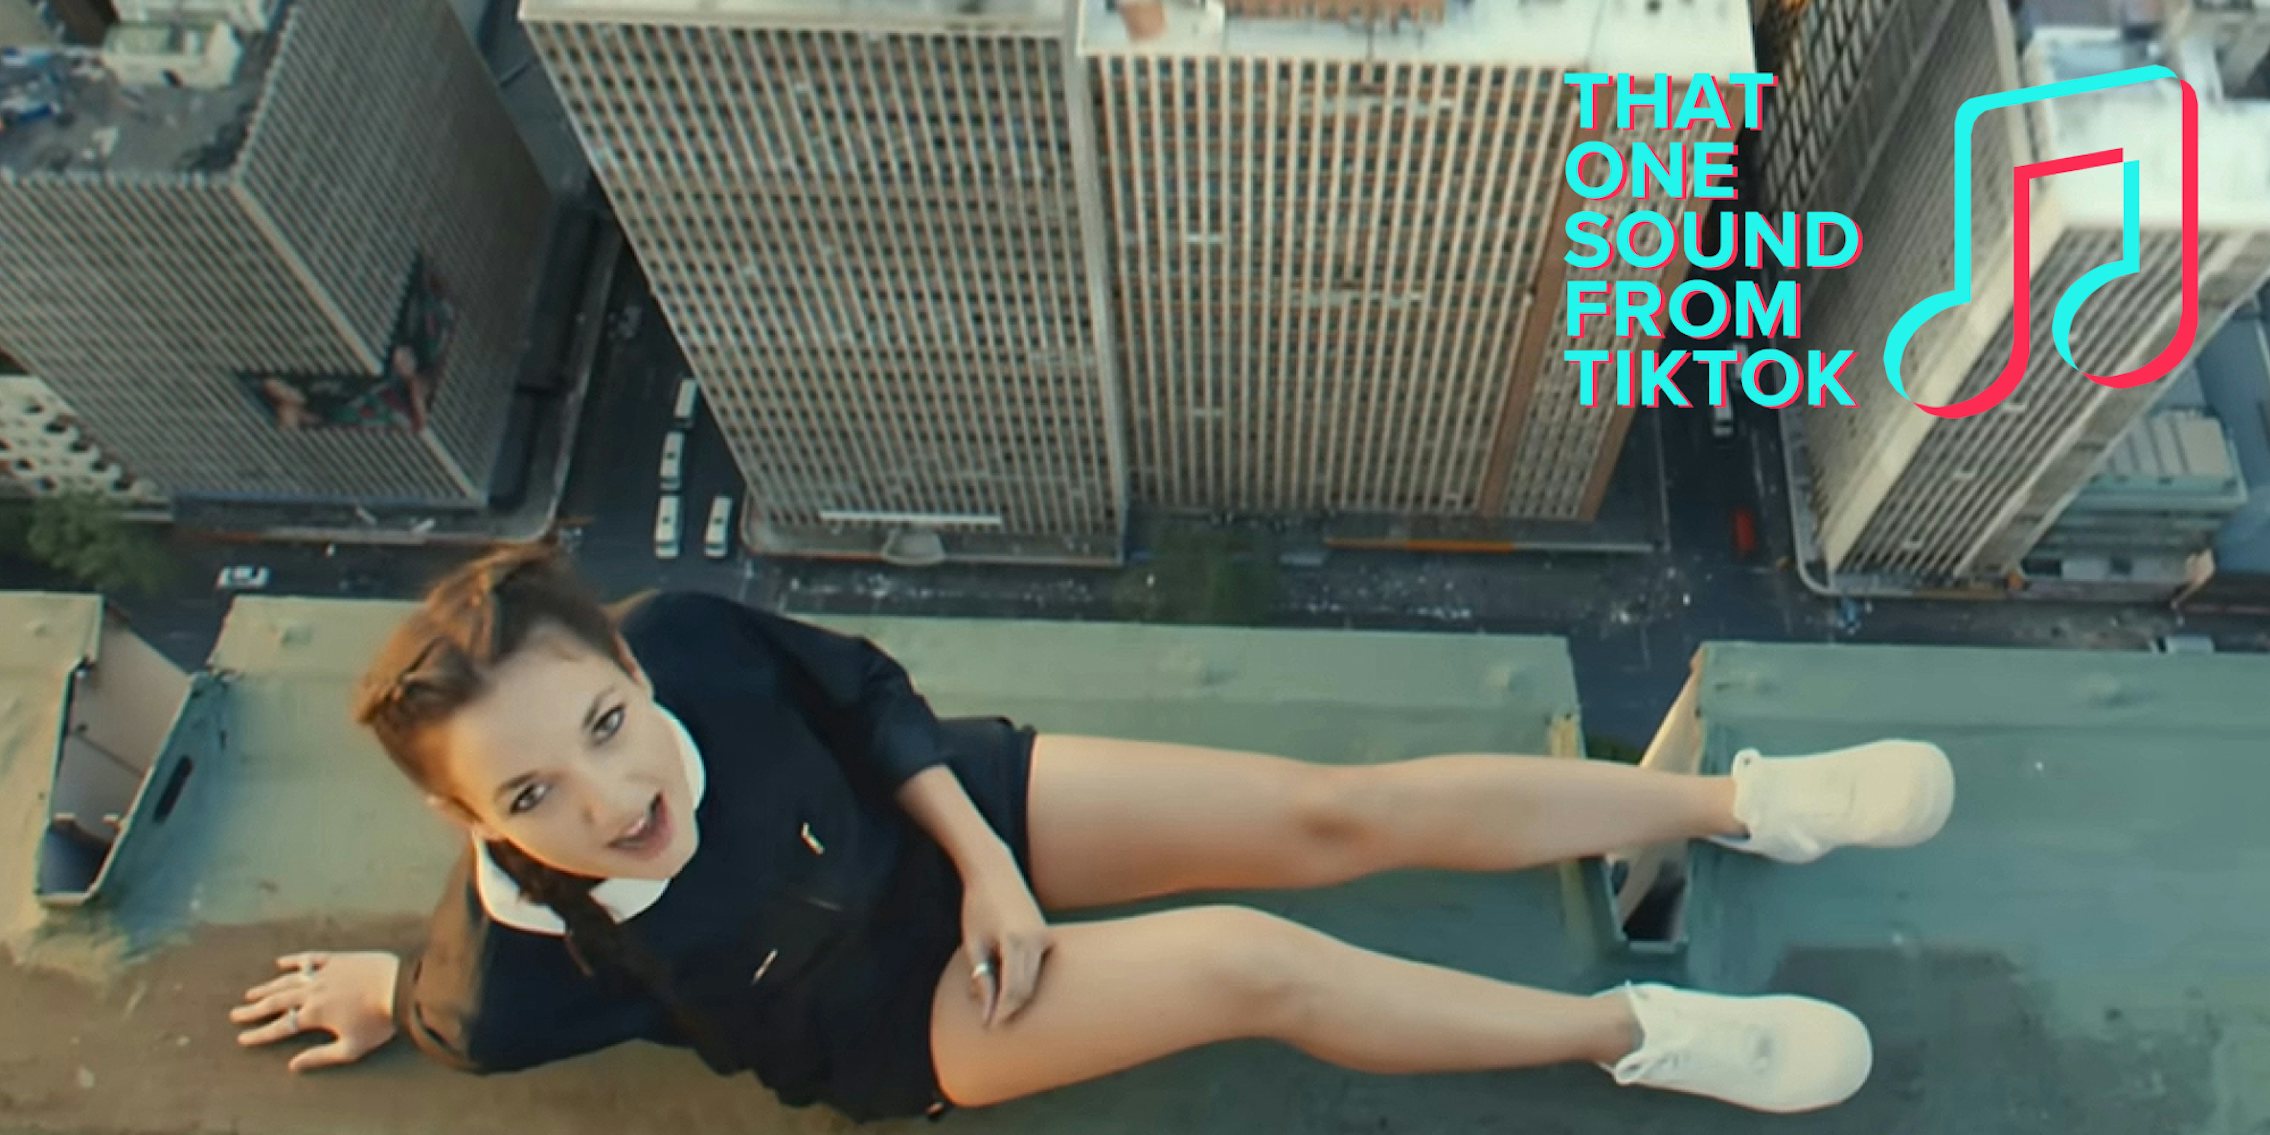 Jain - Makeba music video city scene with 'That One Sound From TikTok' logo in top right corner